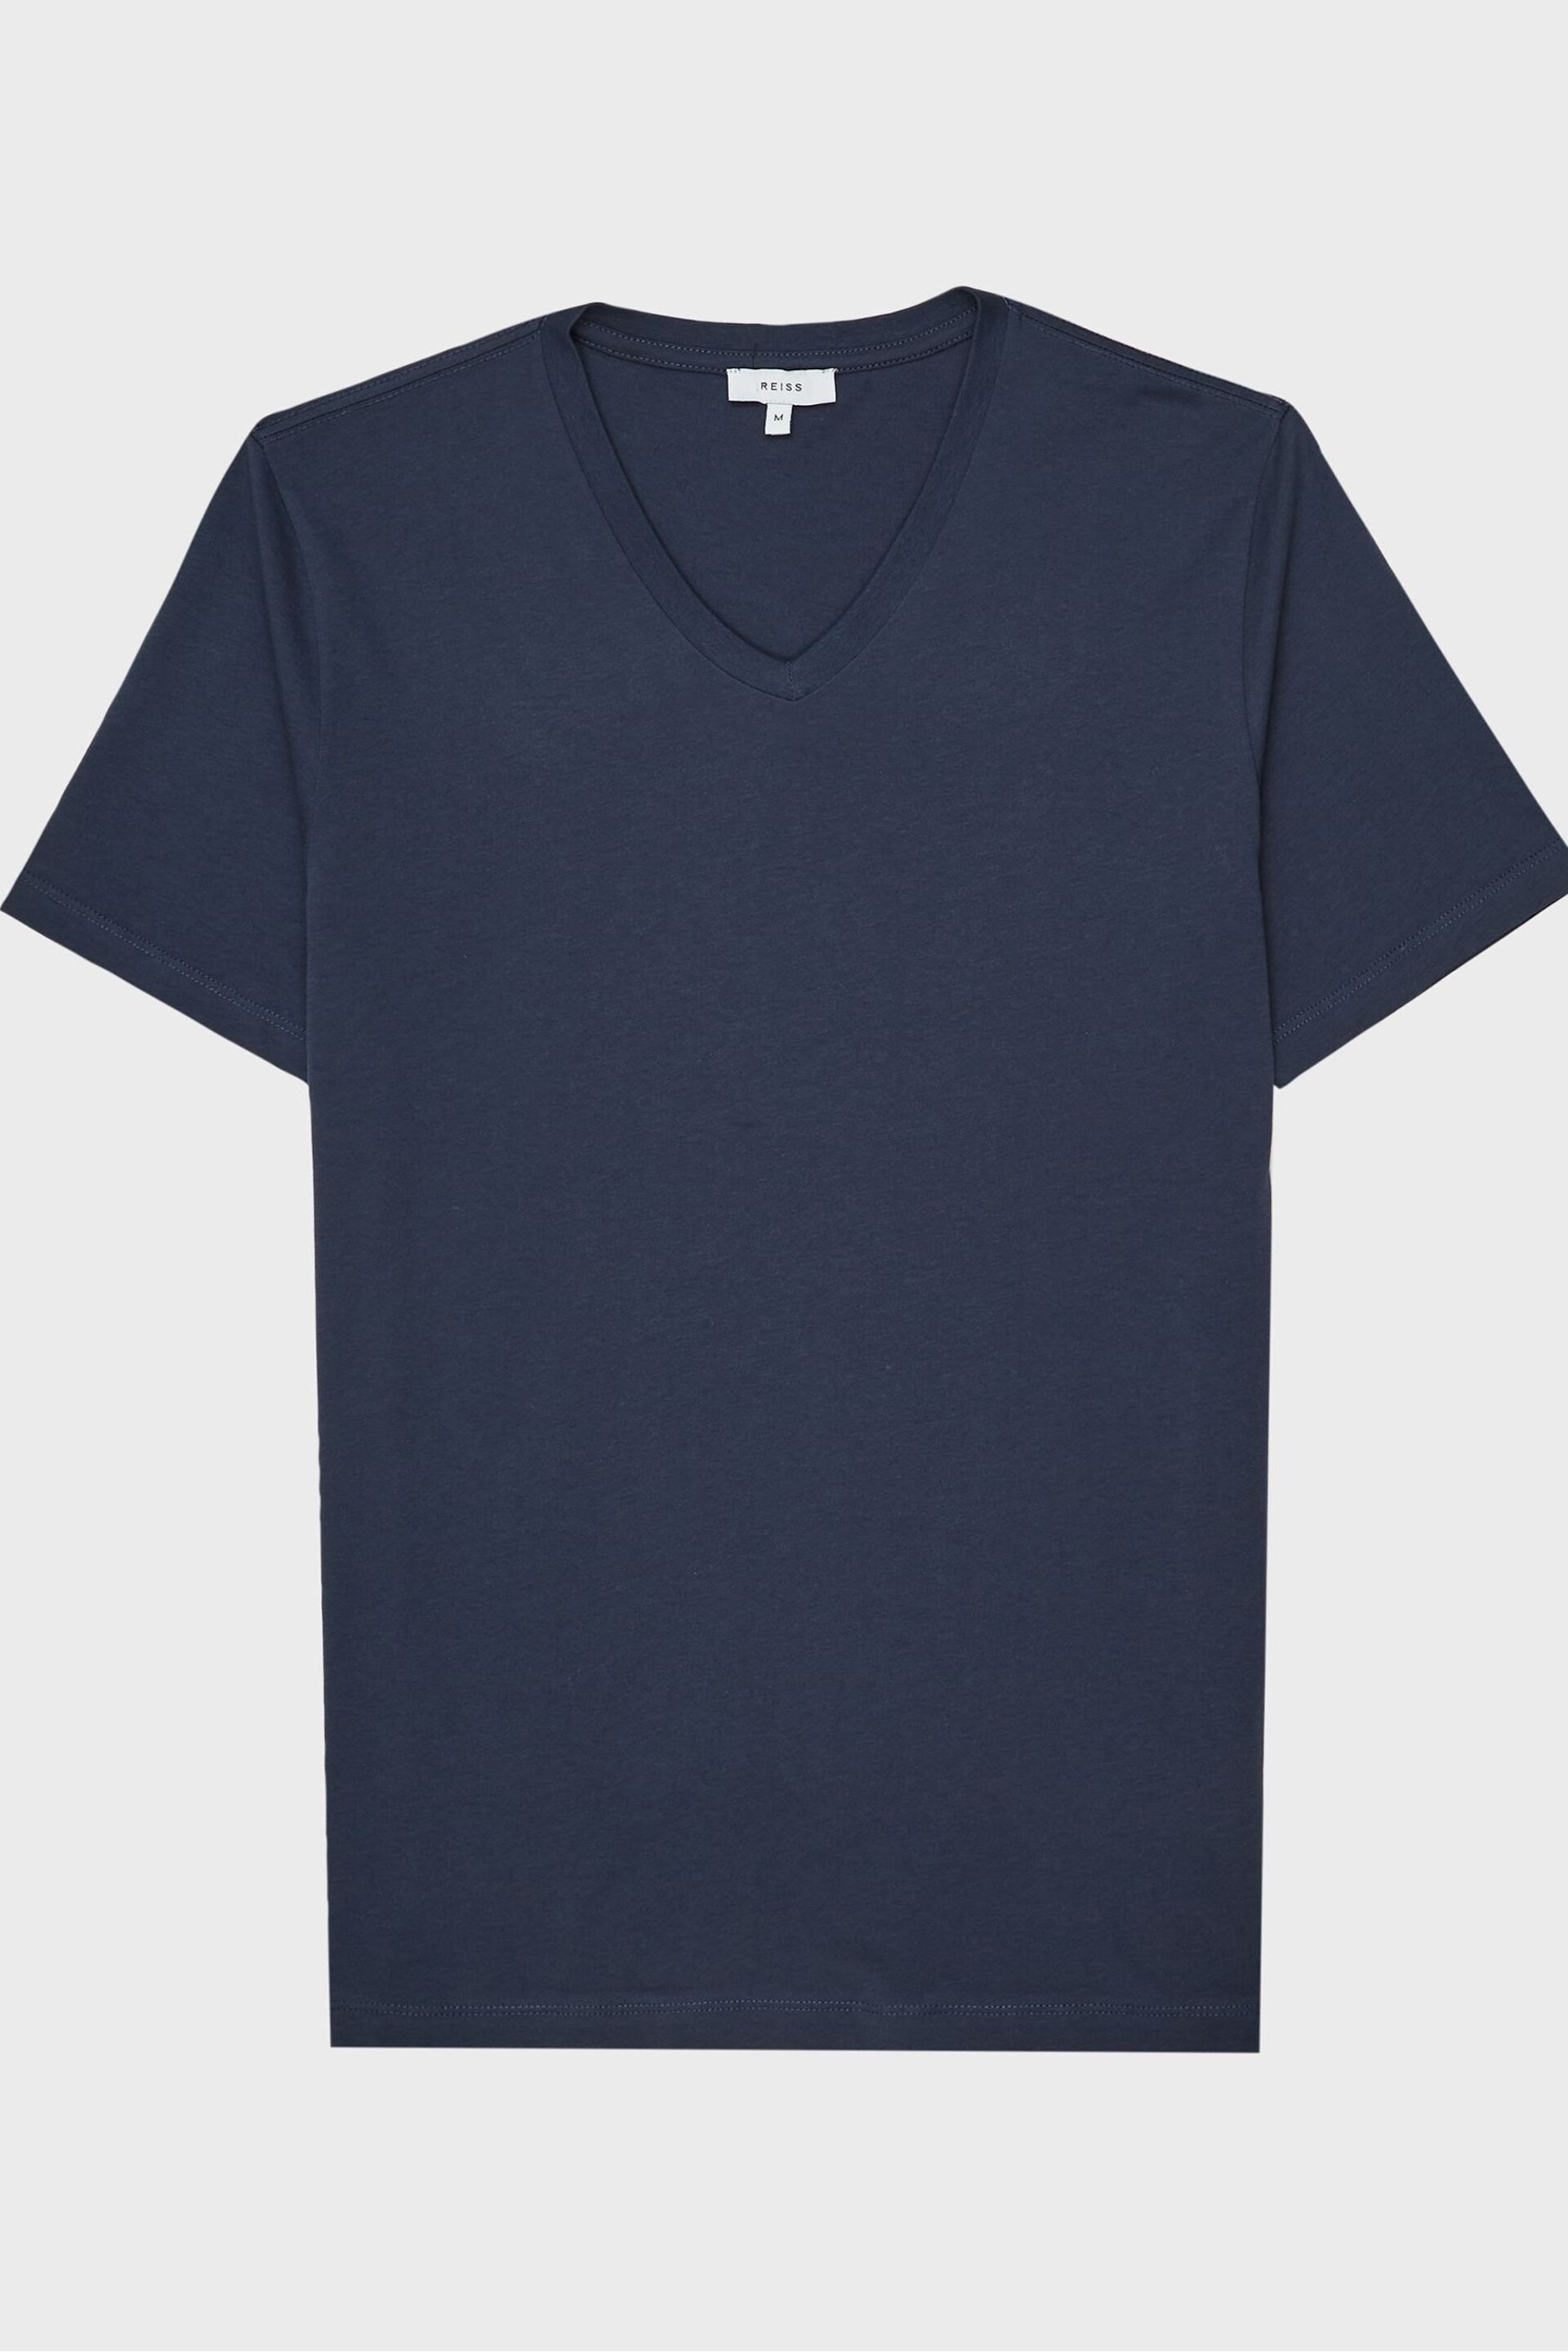 Reiss Airforce Blue Dayton Cotton V-Neck T-Shirt - Image 2 of 5